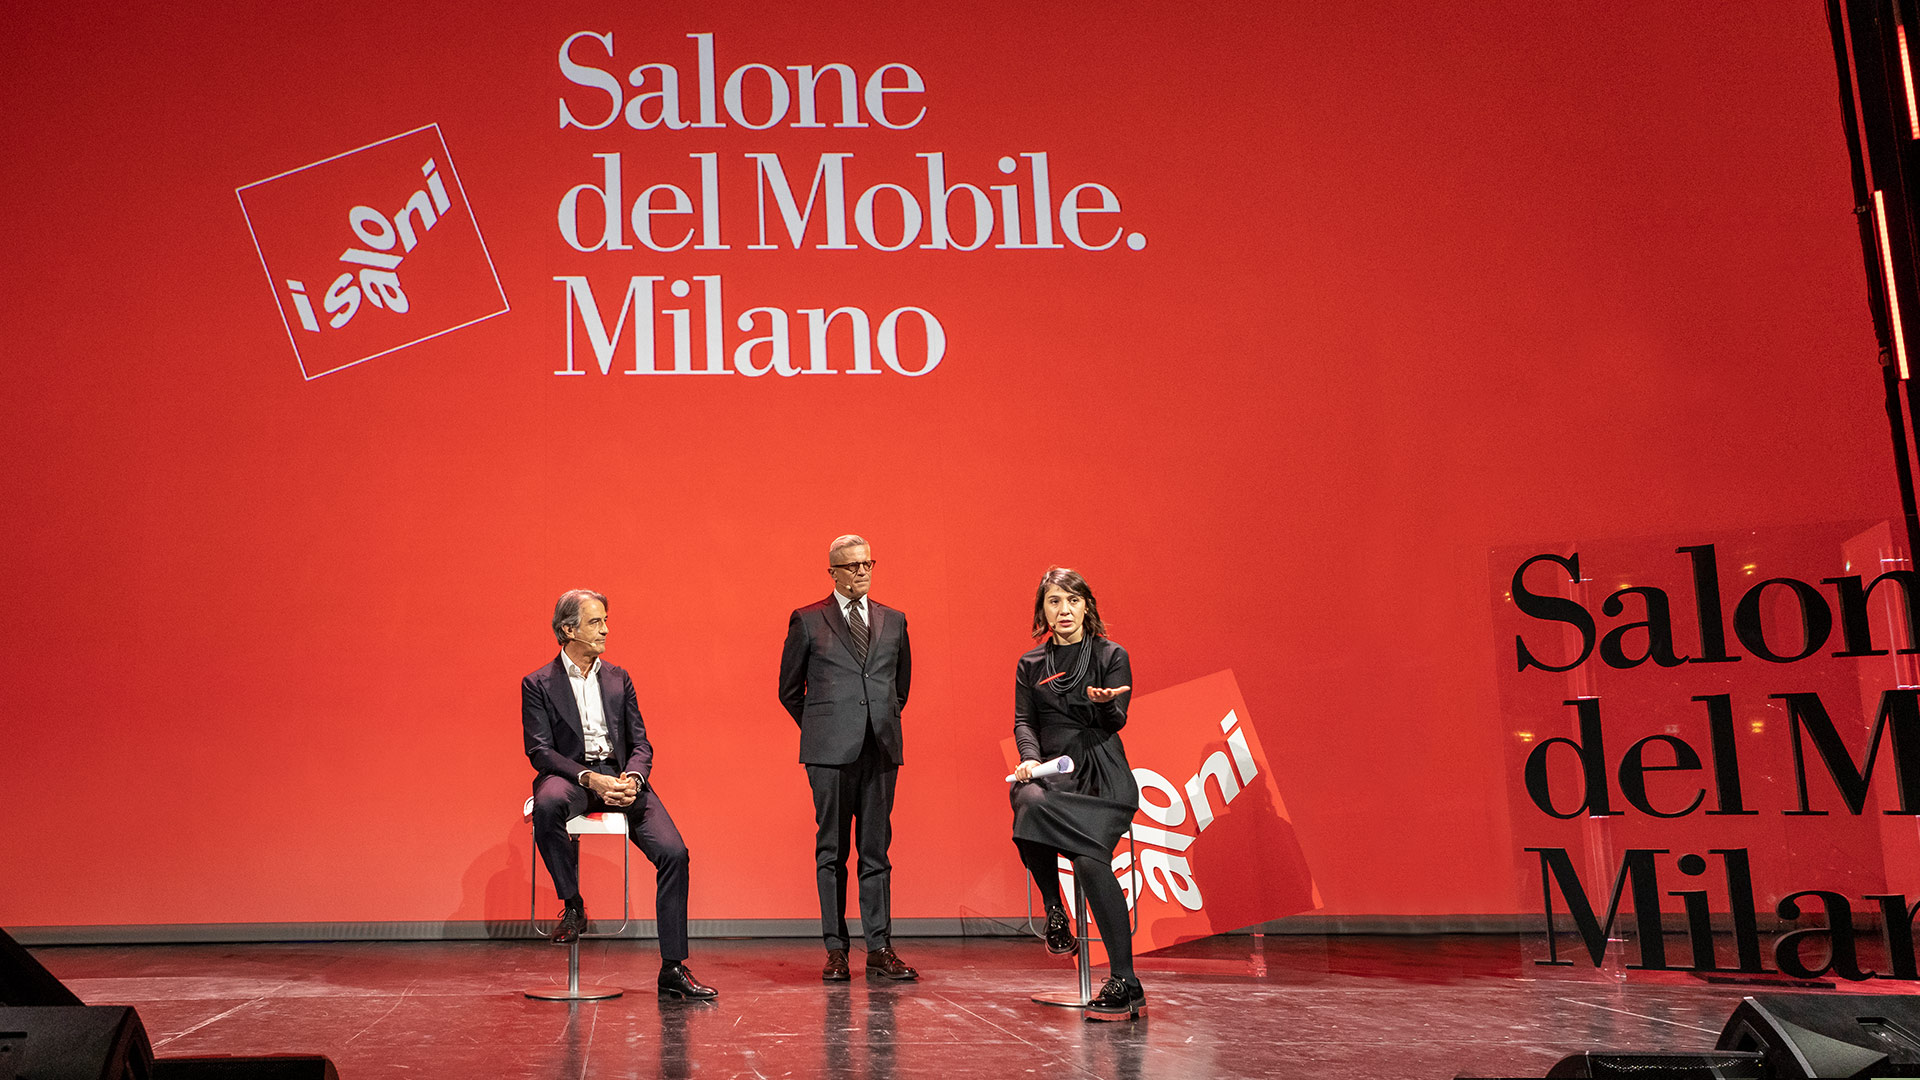 The new dates of the Salone del Mobile.Milano 2022